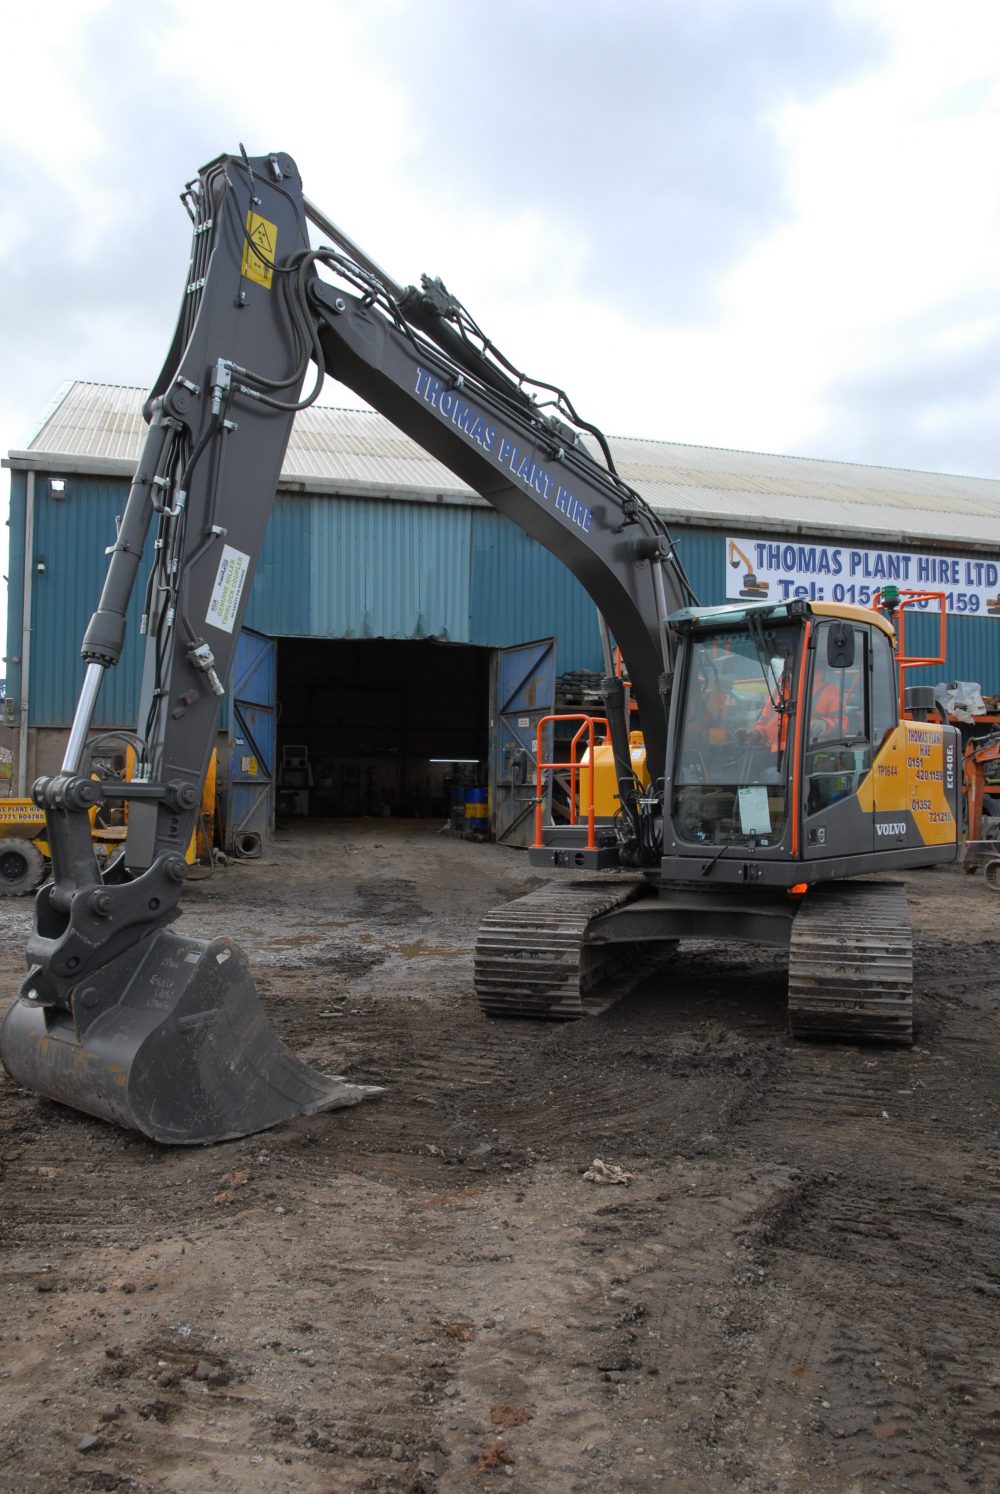 Ten shiny new 14 tonne Volvo Excavators for Thomas Plant in Wales